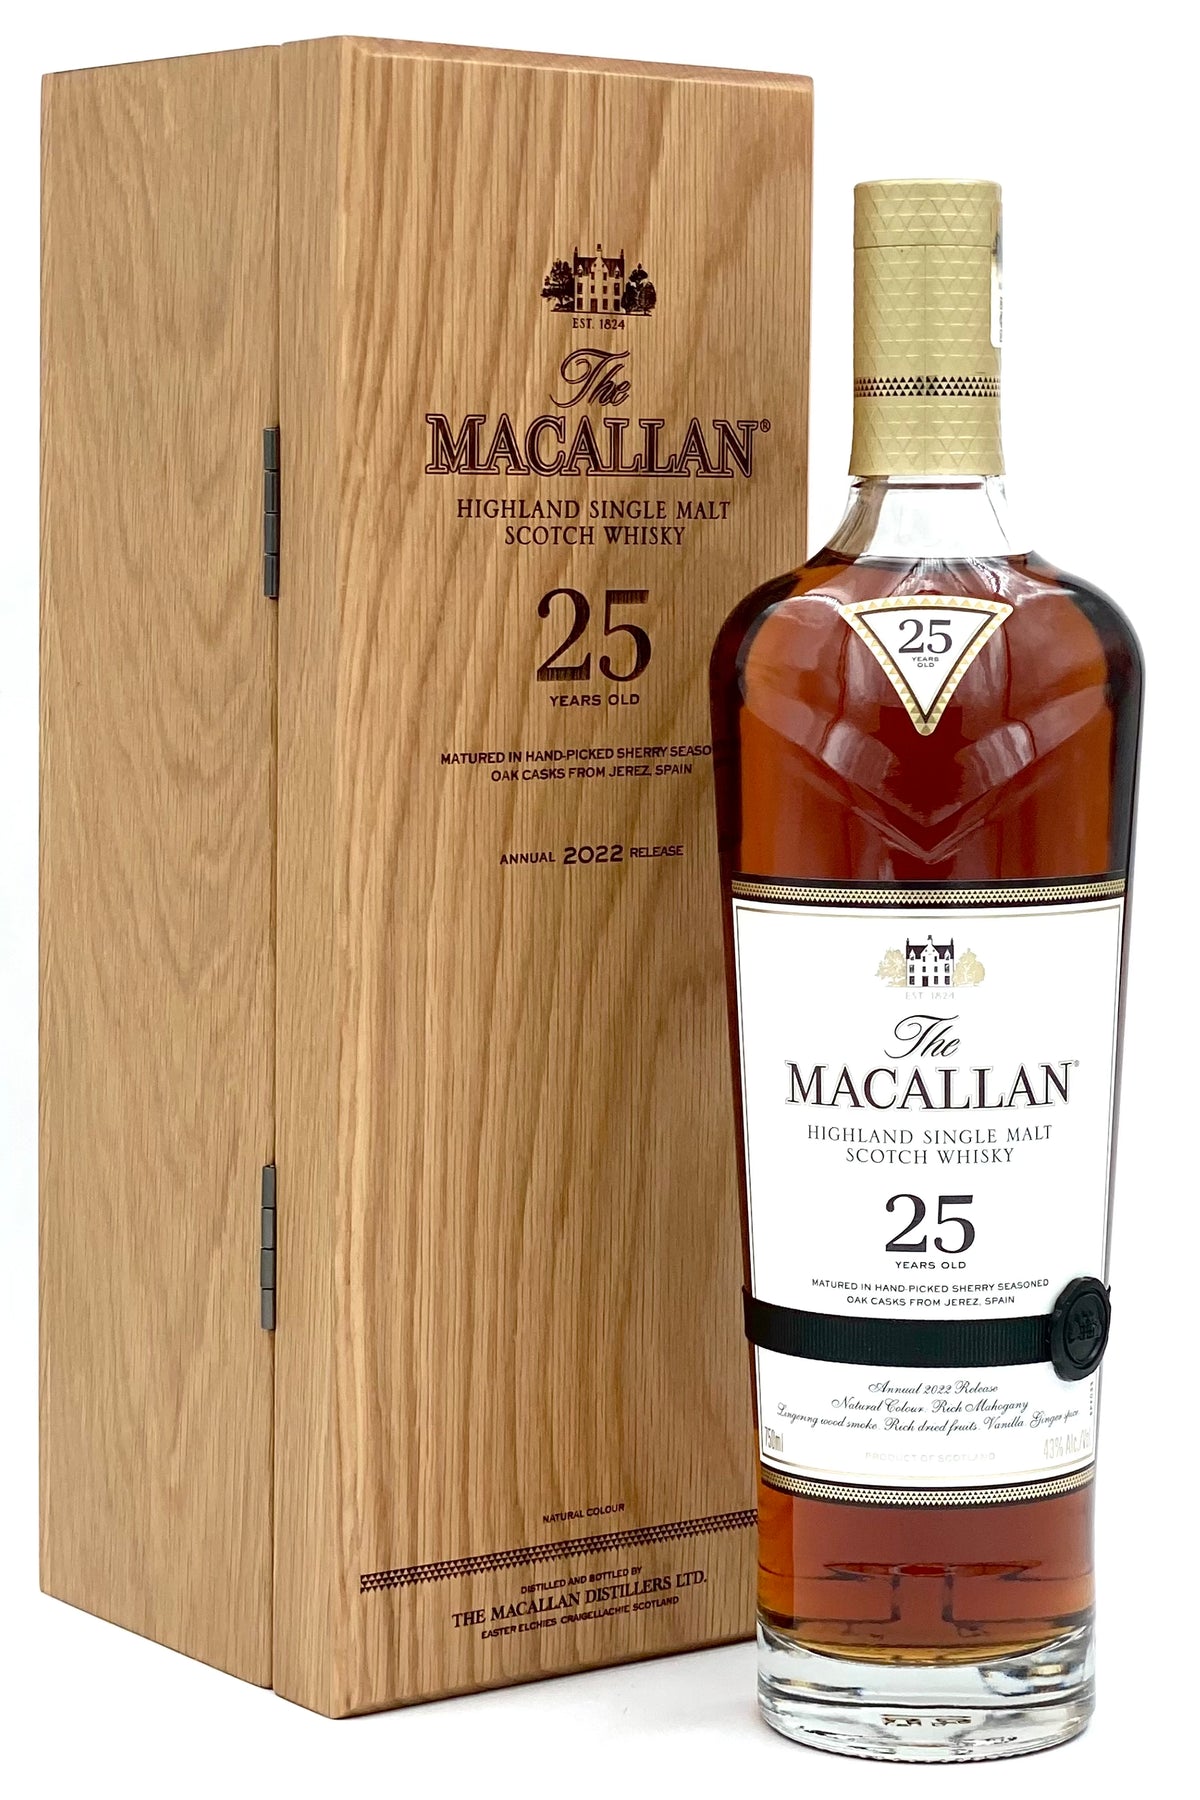 Macallan 25 Year Old Highland Single Malt Scotch Whisky